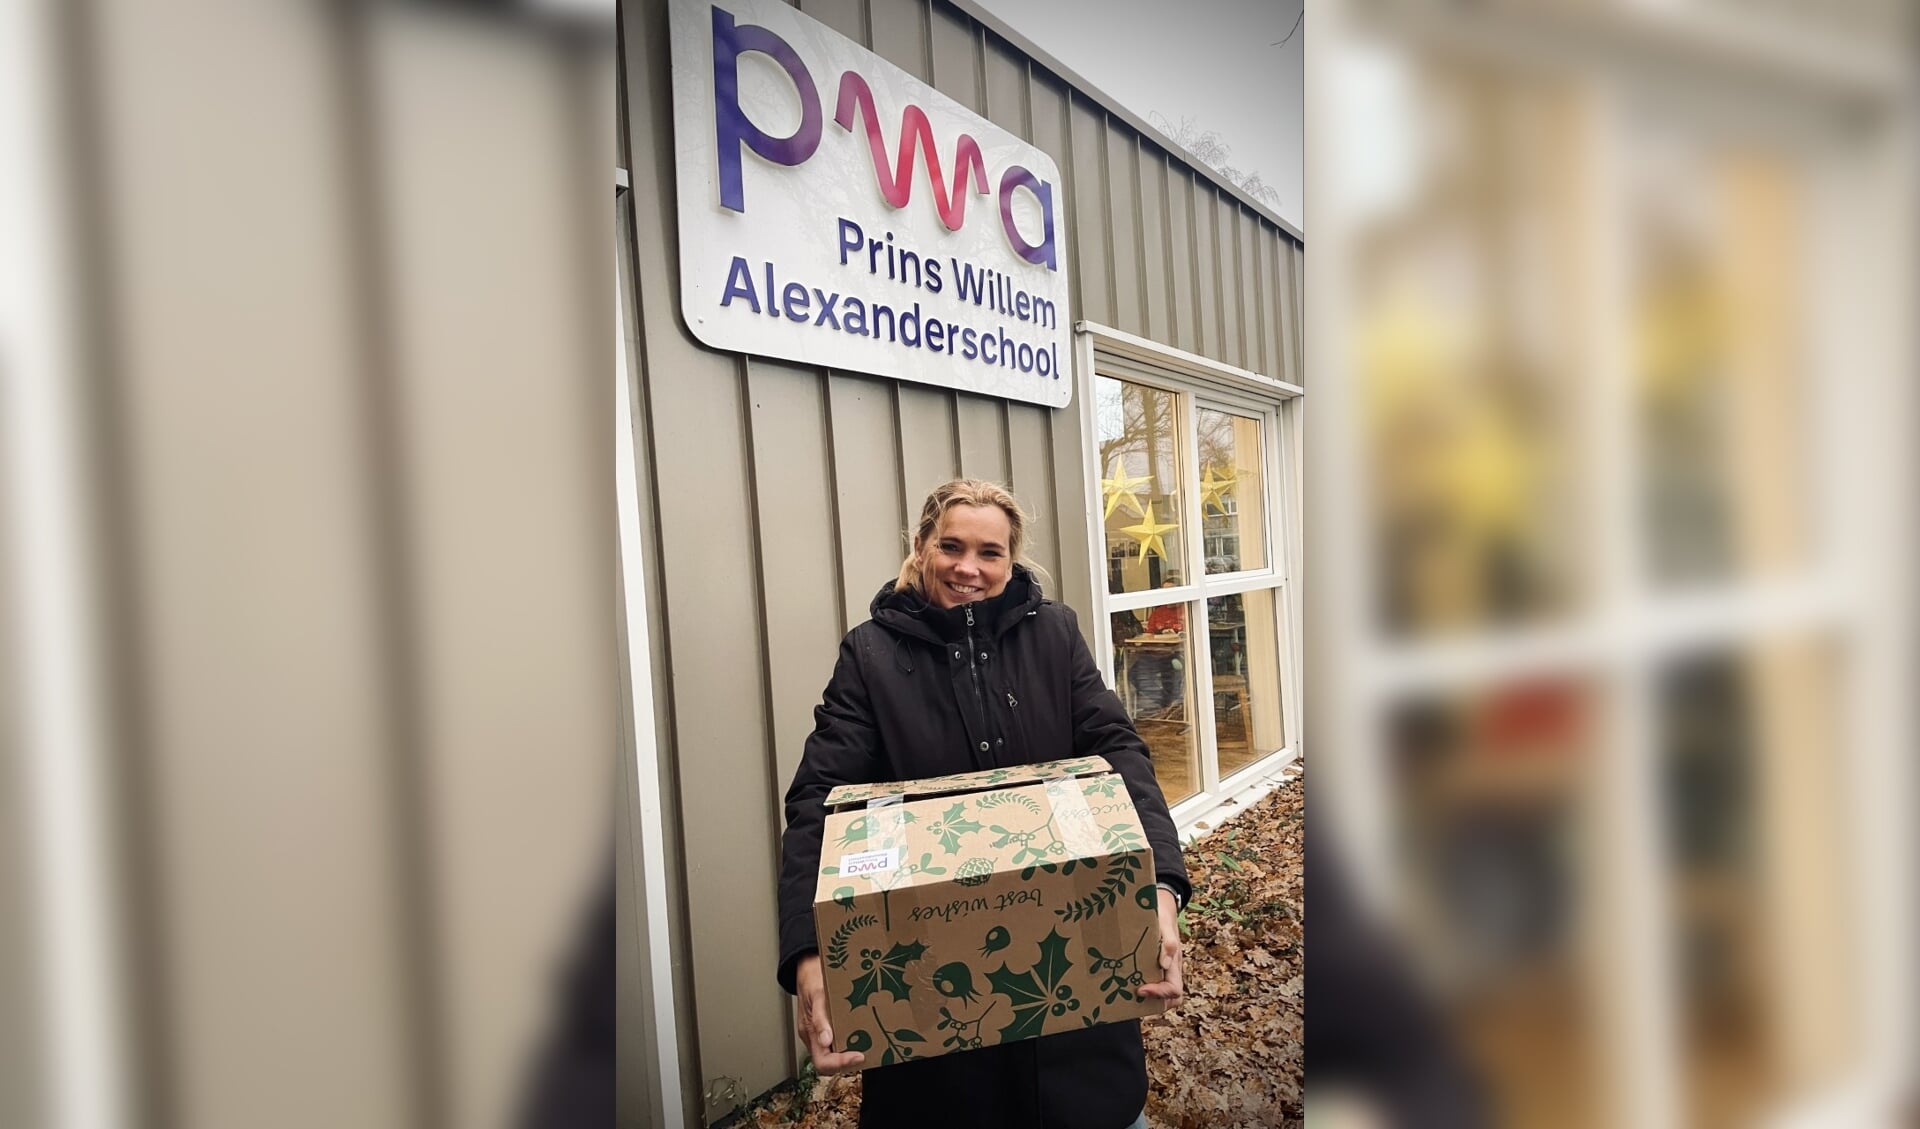 Directeur Yvonne Geelhoed van de Prins Willem Alexanderschool (PWA) in Ermelo brengt kerstpakketten rond.